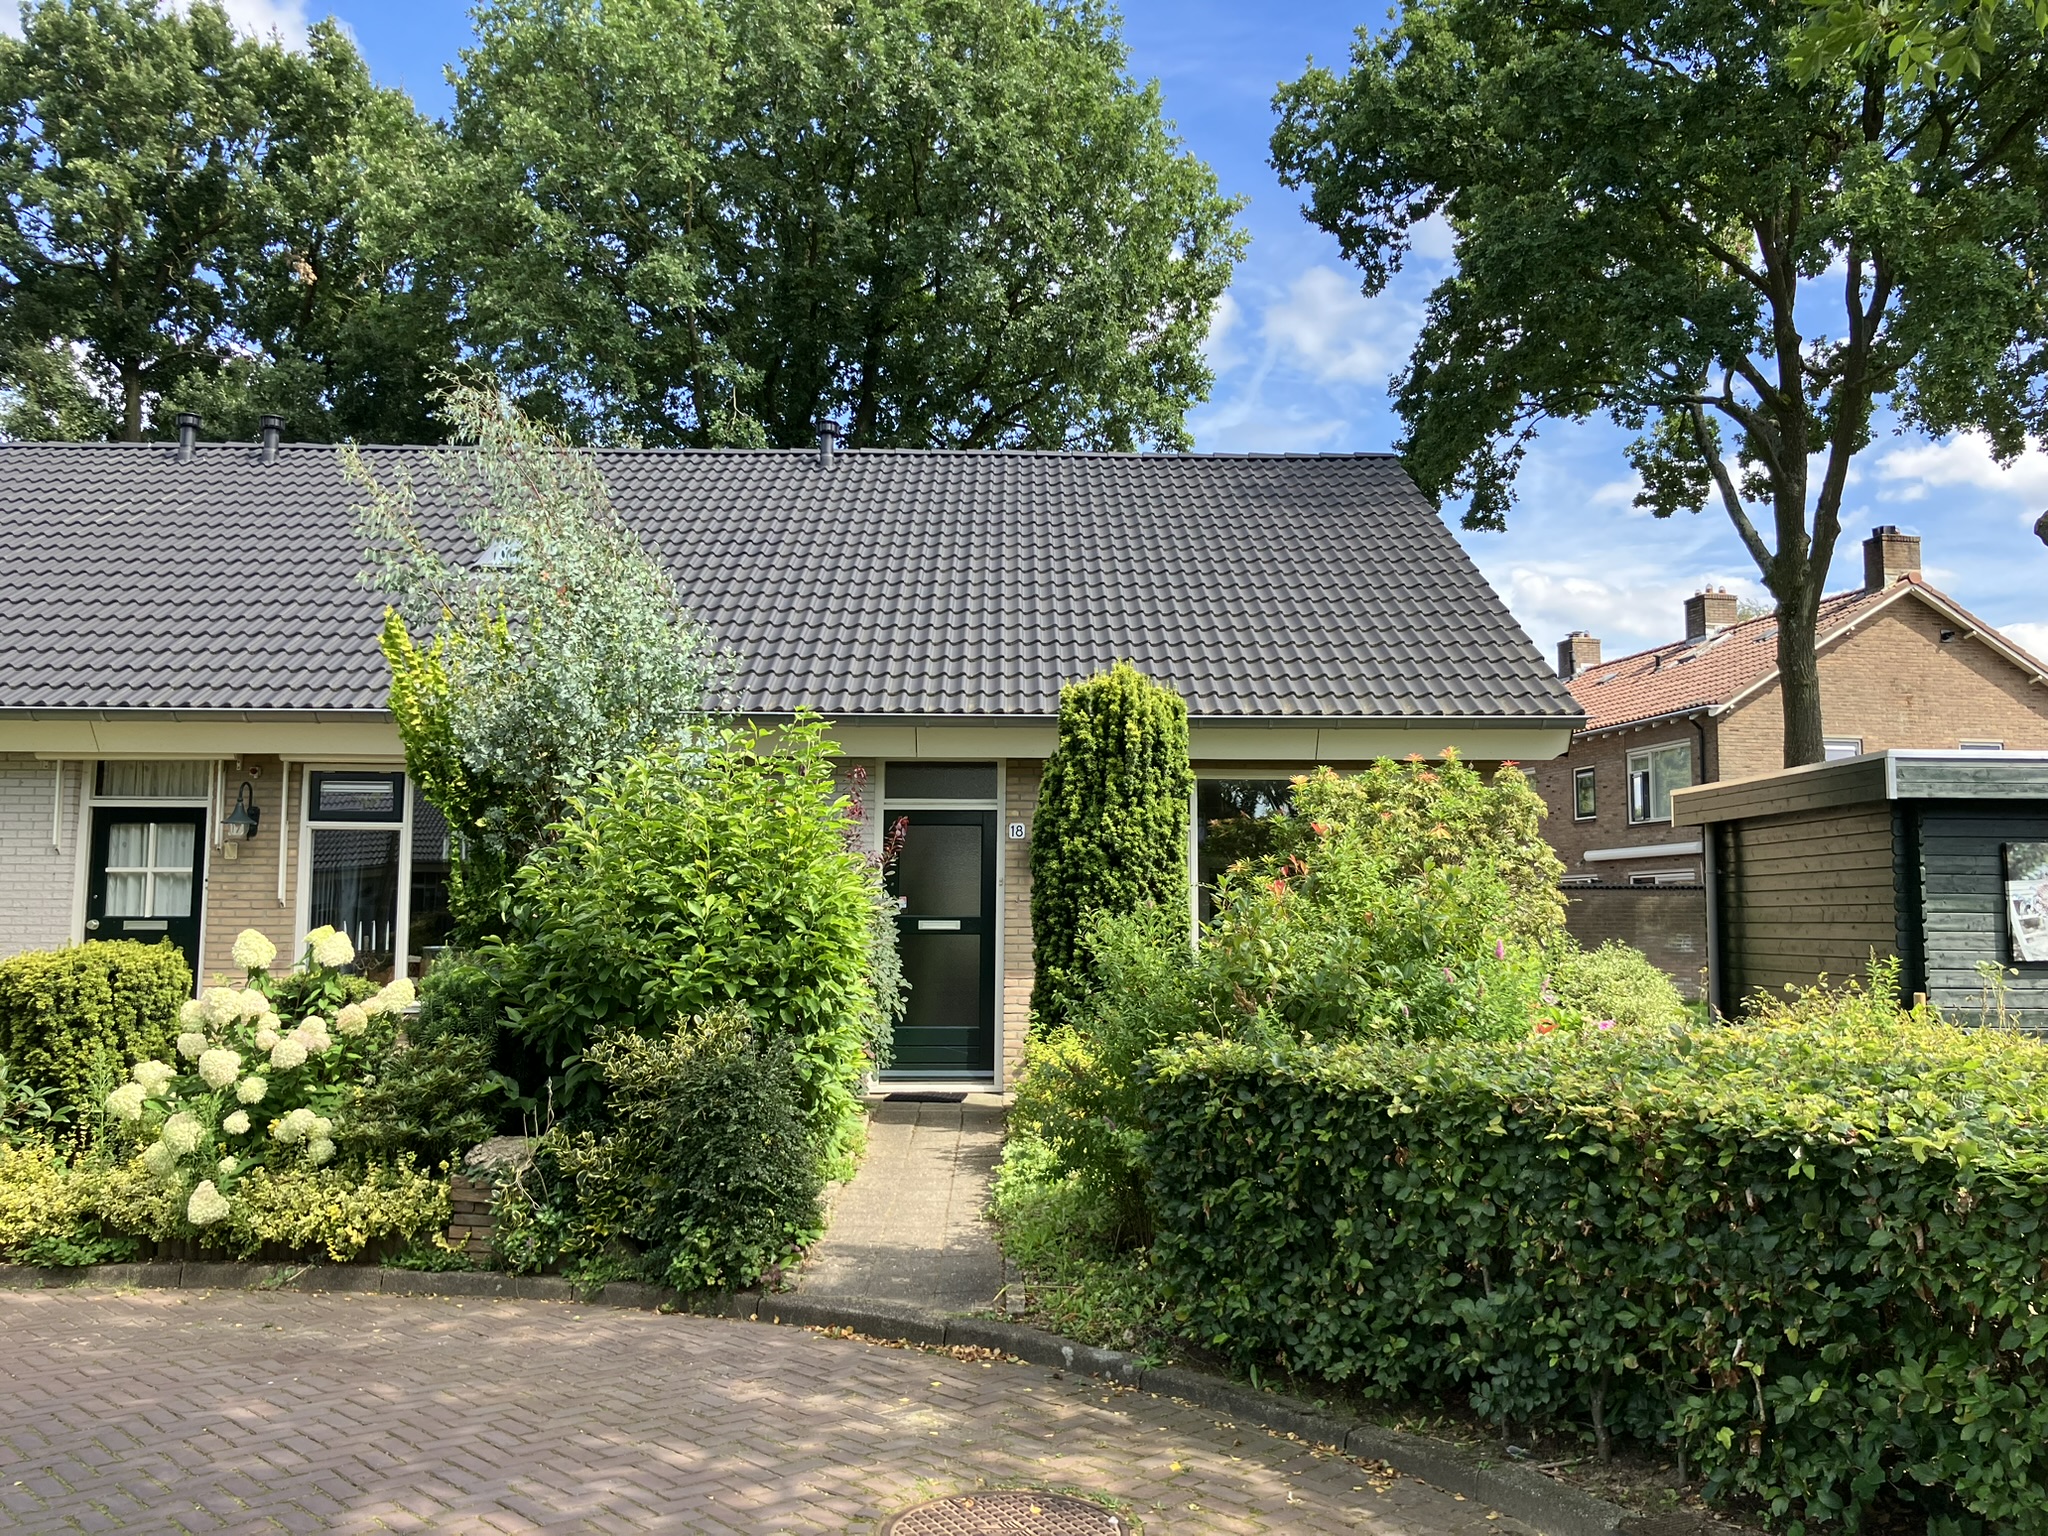 Willem-Alexanderhof 18, 3881 TL Putten, Nederland